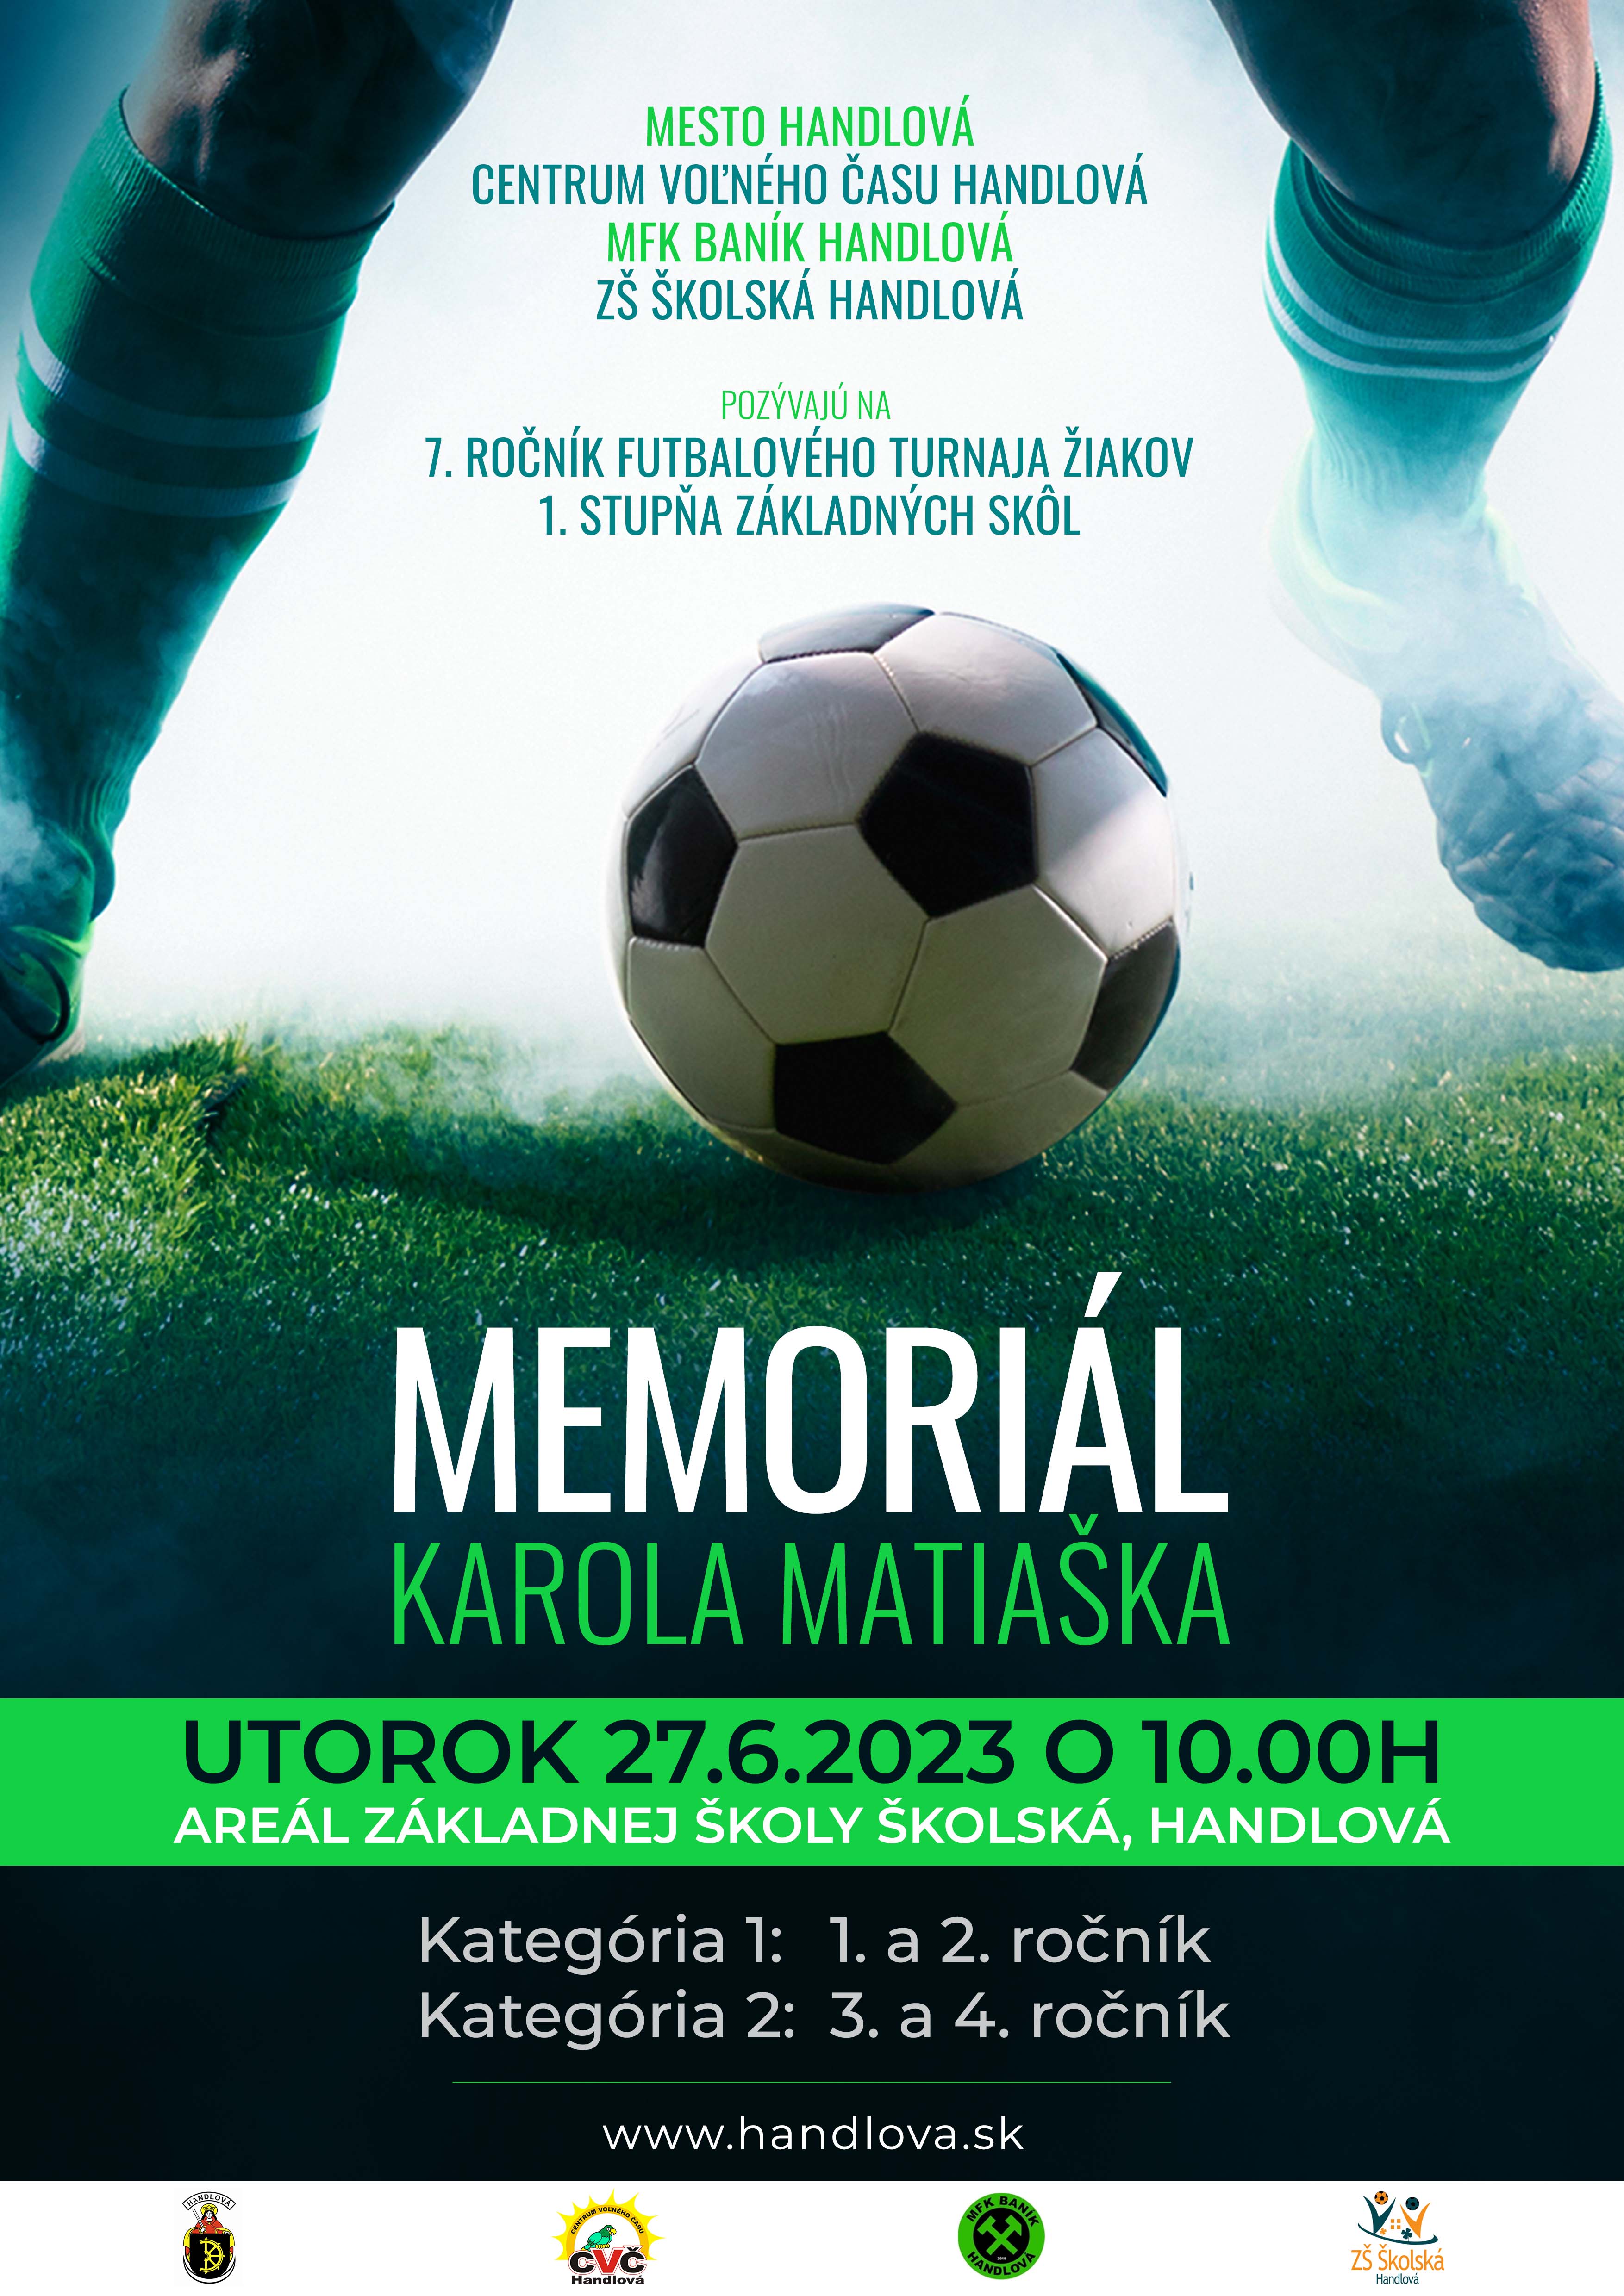 plagat_memorial_kmatiaska_web